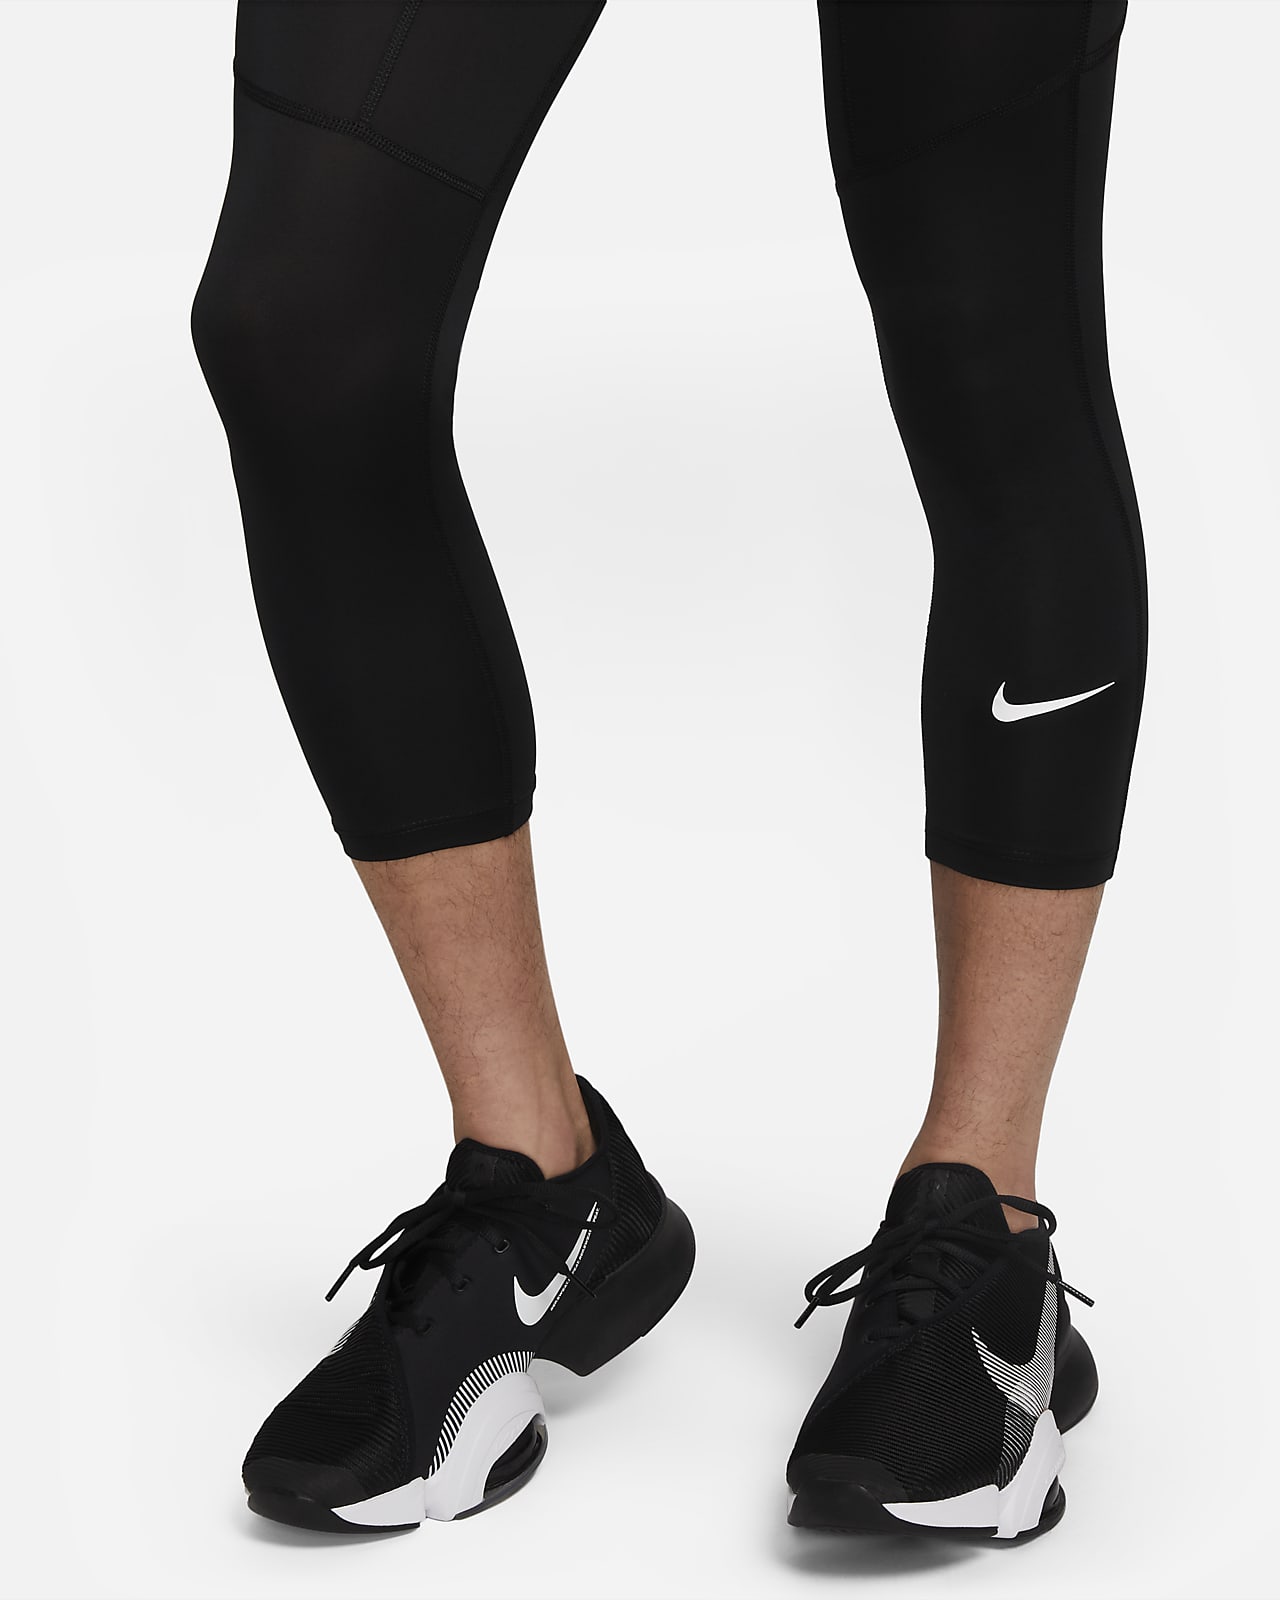 Women's 3/4 Running Crop Tight, Nike